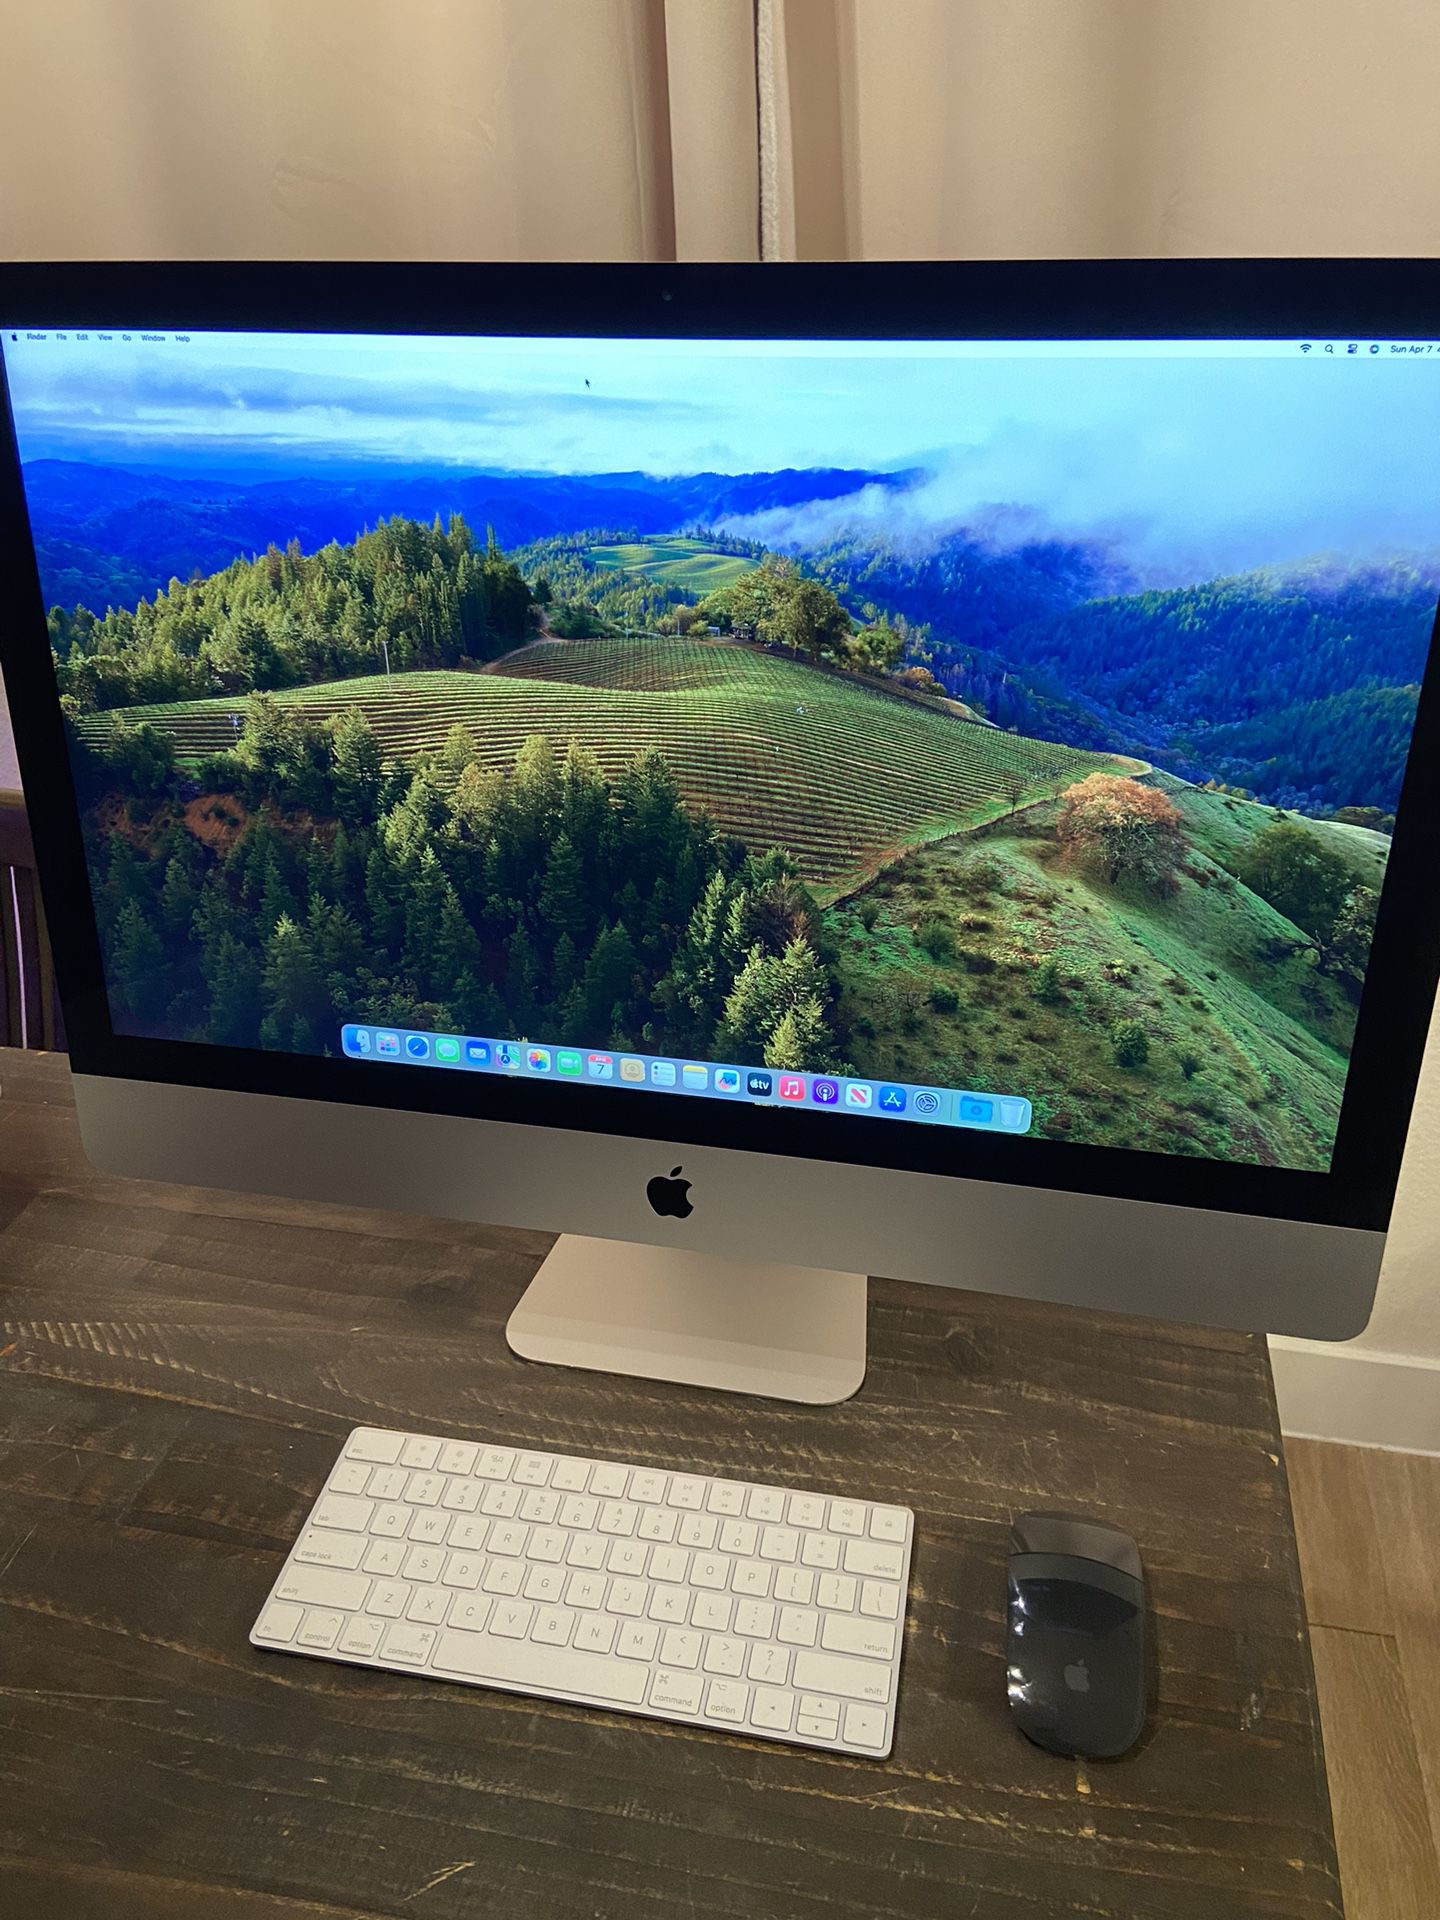 2019 Apple iMac 27-inch Retina 5K Display 16Gb Ram 256gb Ssd. Sonoma macOS. Wireless Keyboard And Mouse 